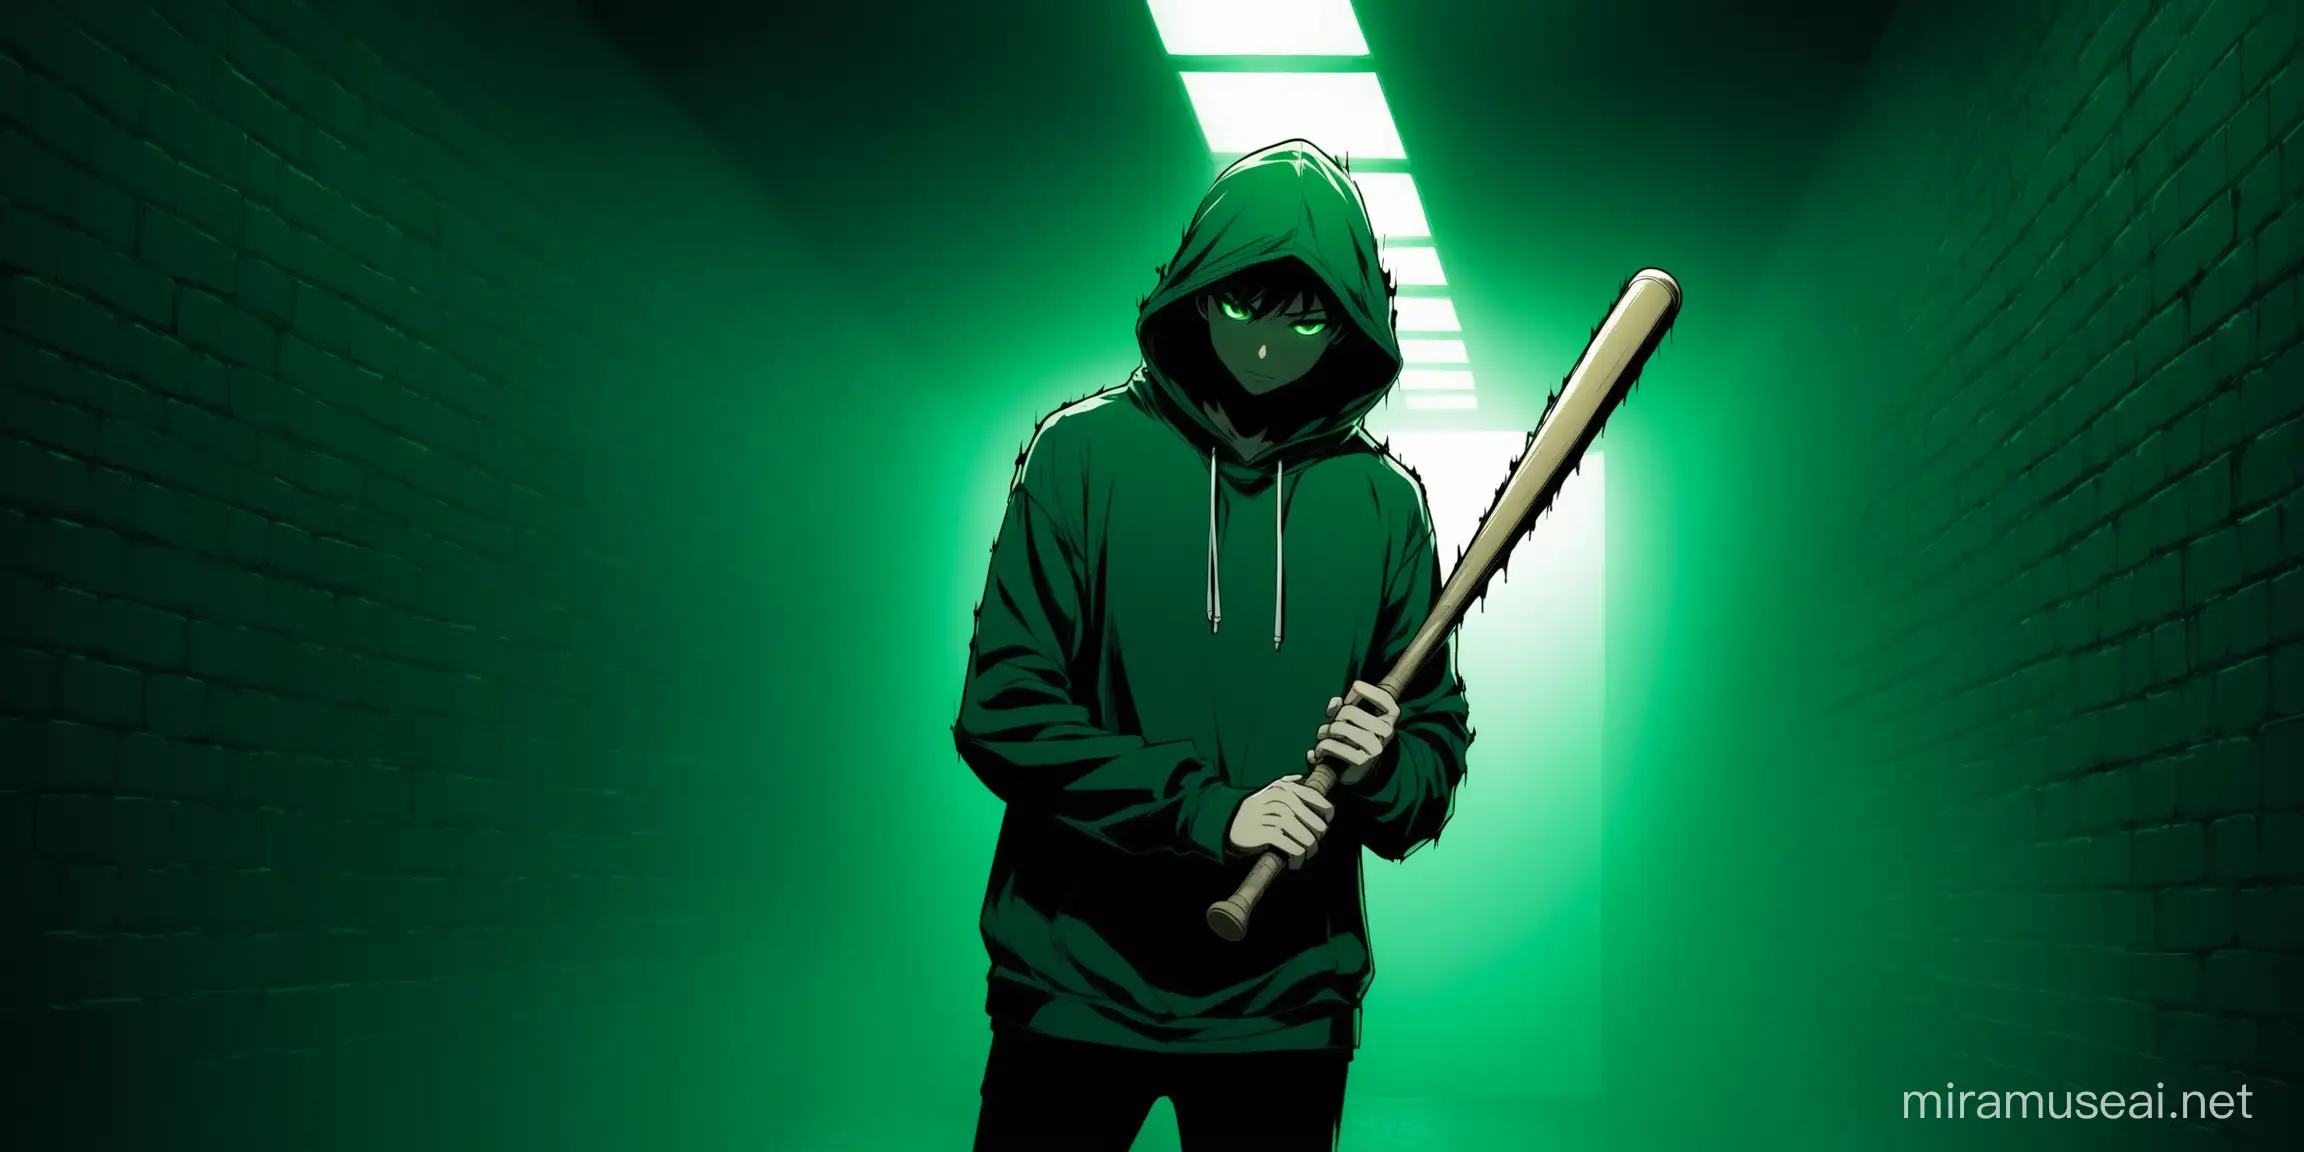 Anime Style Baseball Player in Secret Underground Hideout